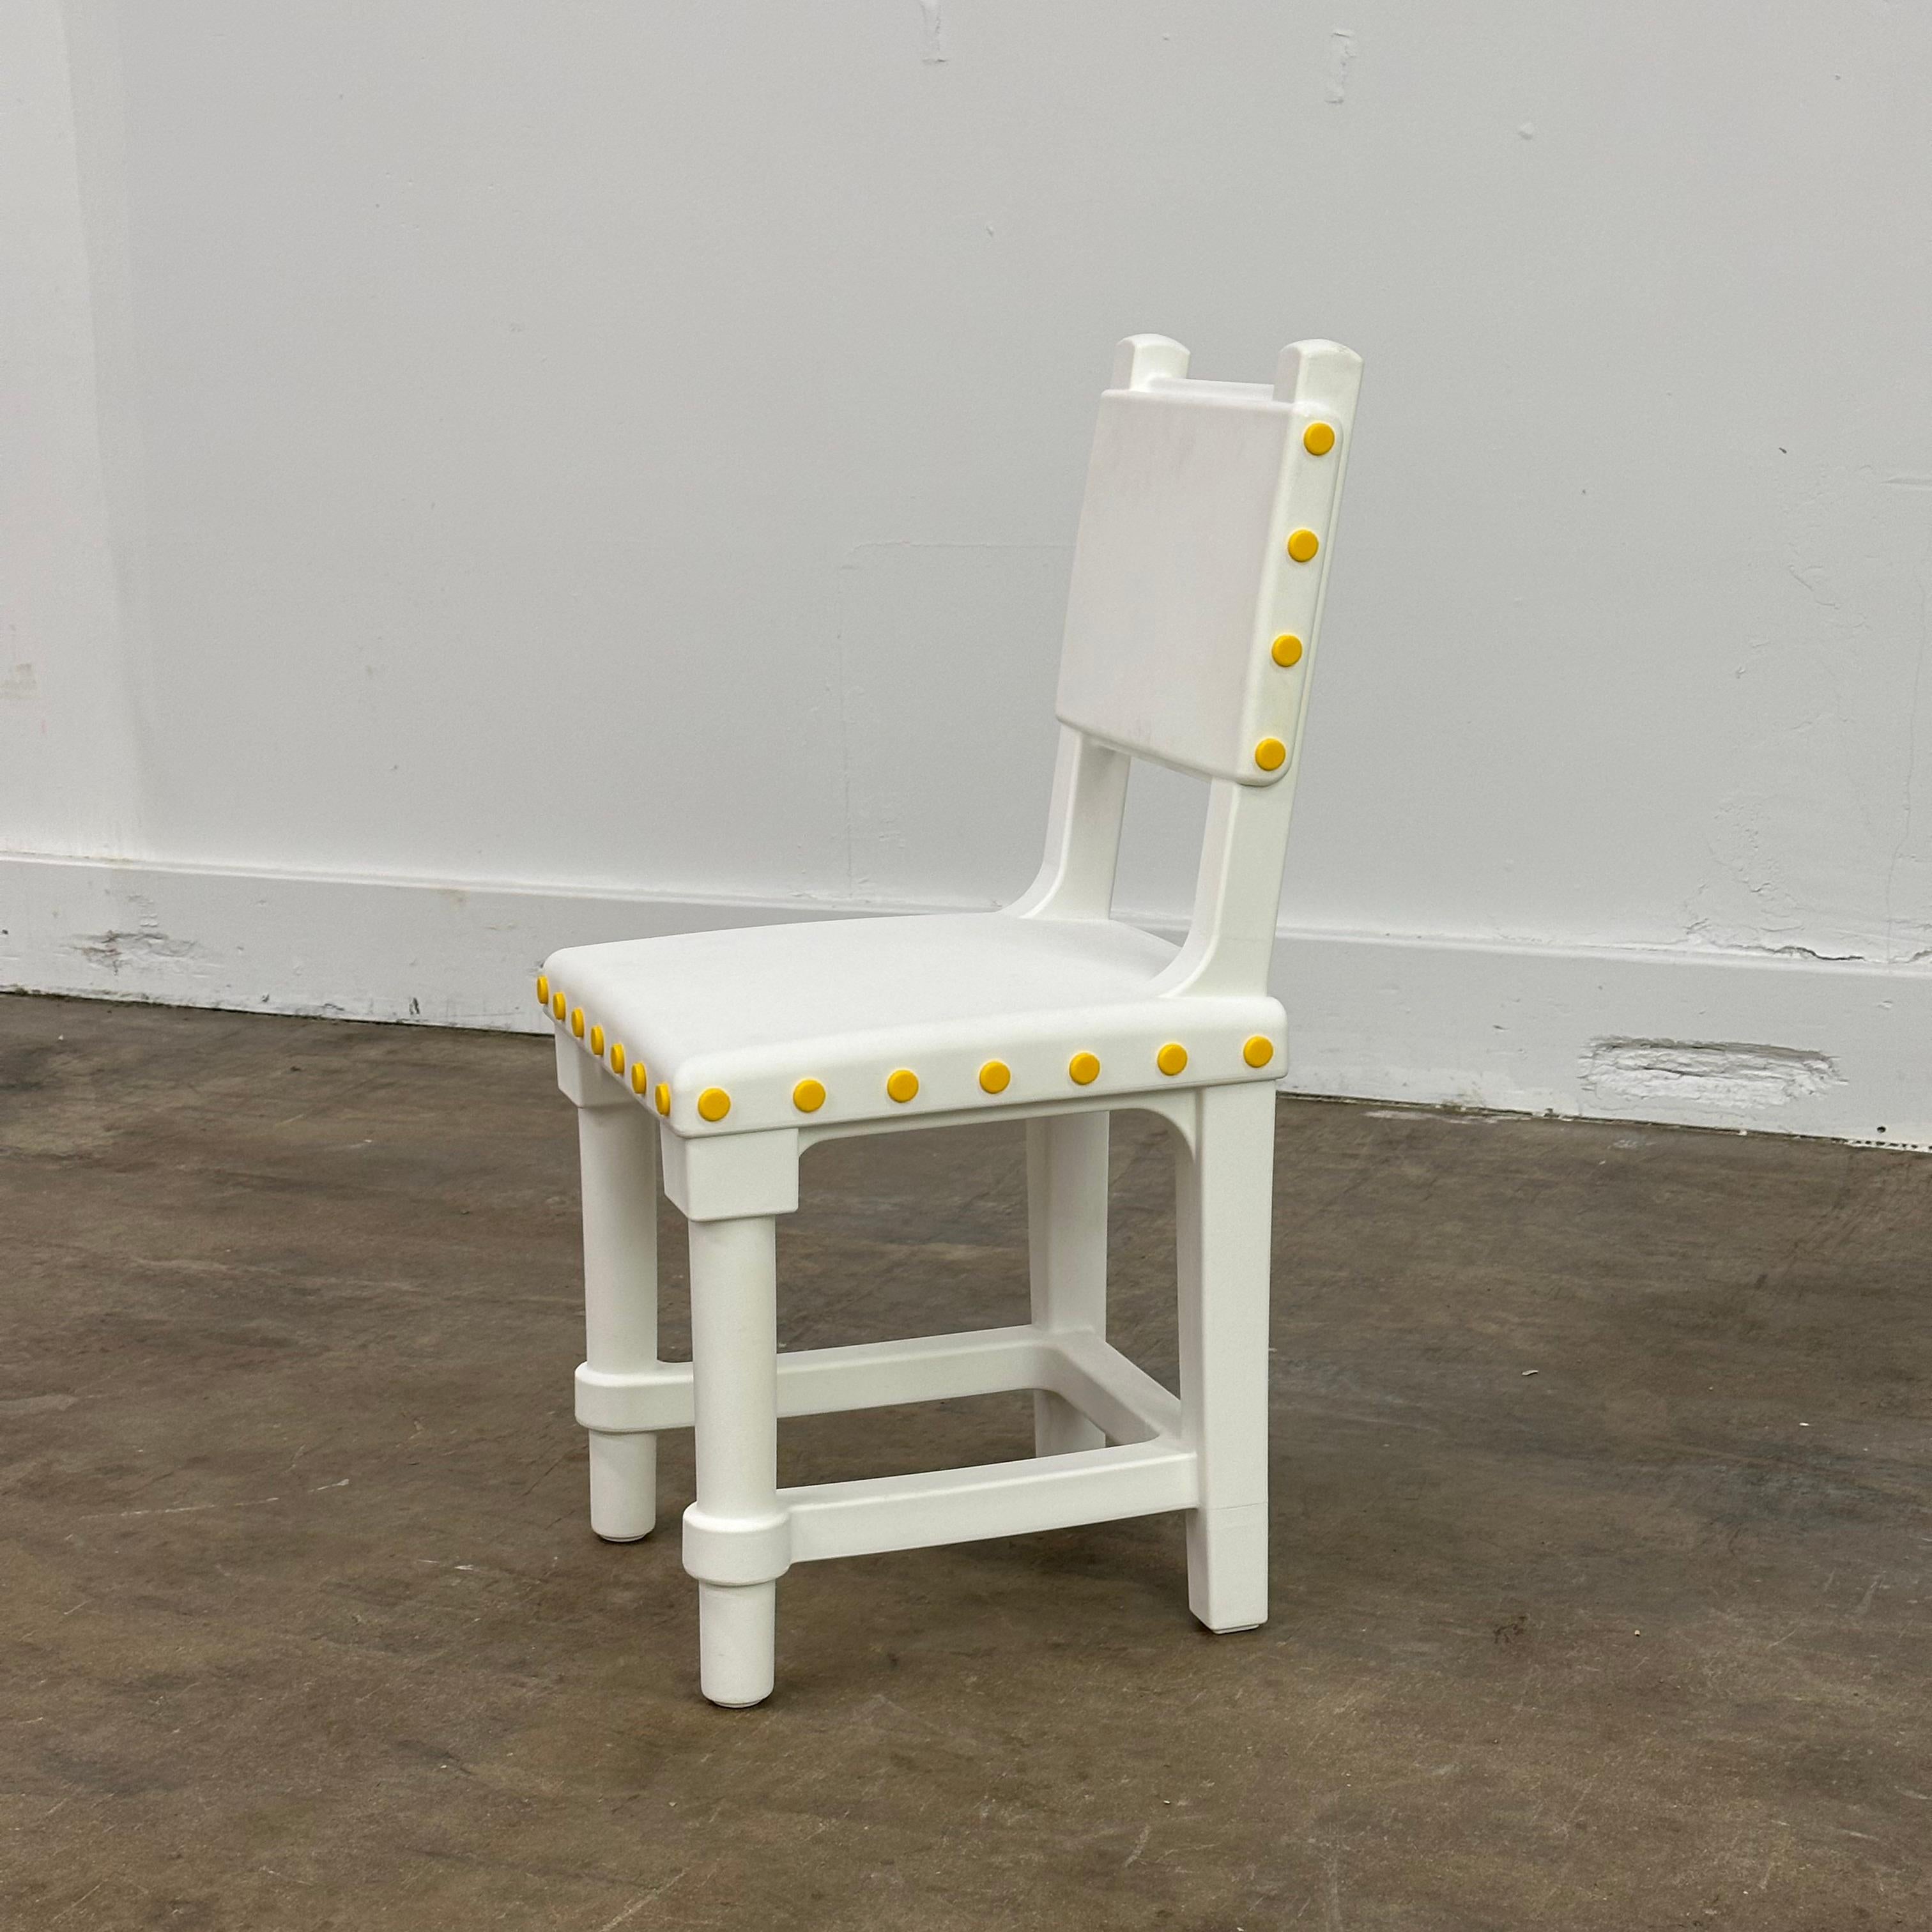 Plastique Gothic Chair by Studio Job for Moooi, Netherlands, c.2010s en vente